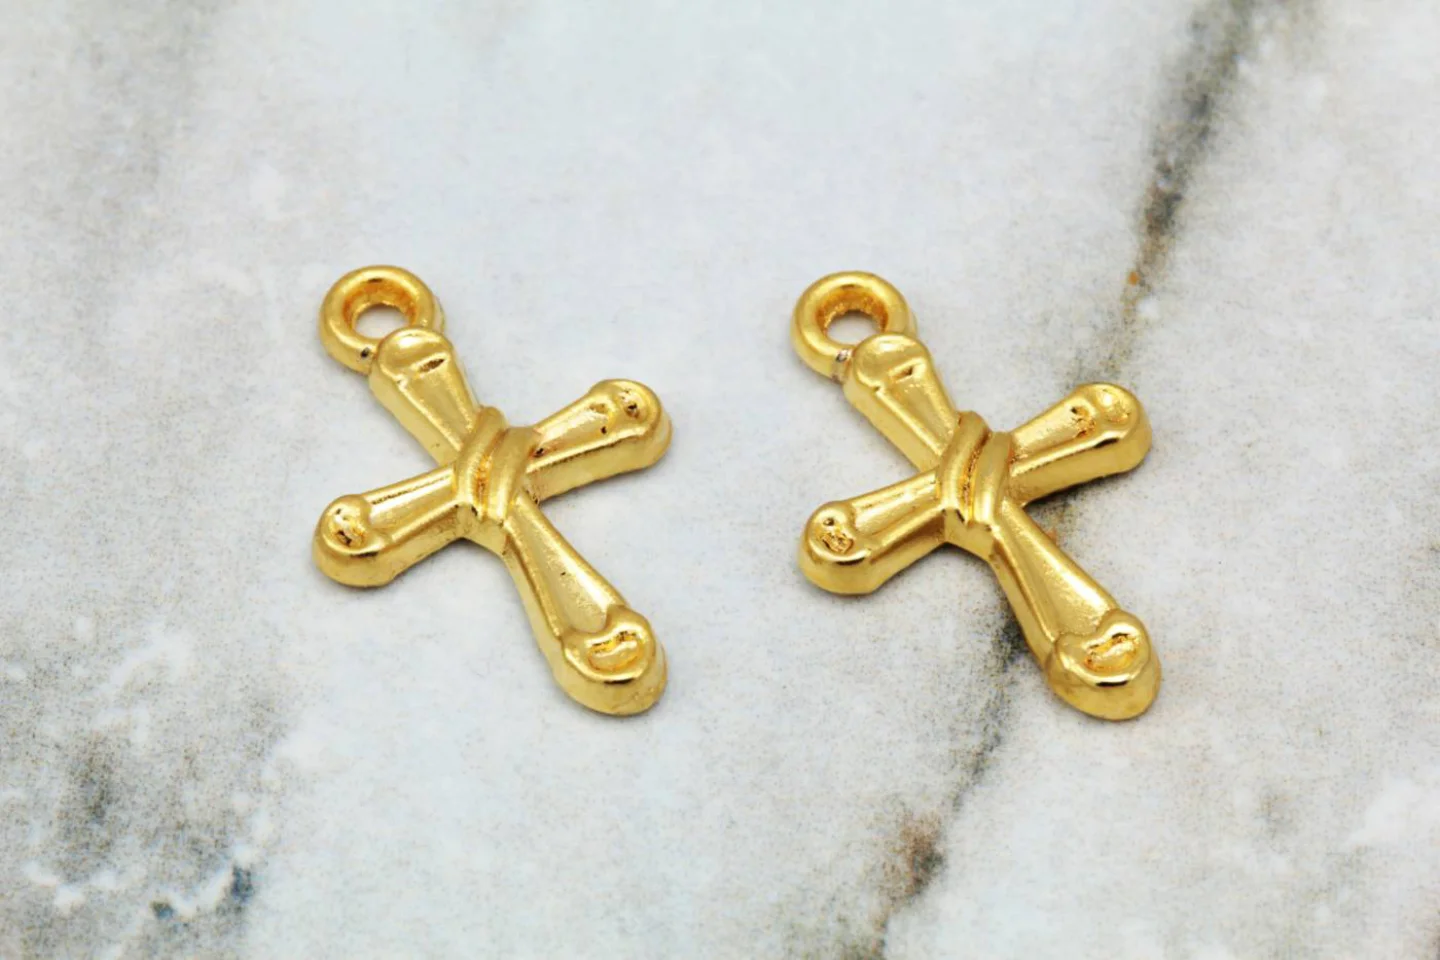 gold-plated-metal-cross-jewelry-pendants.